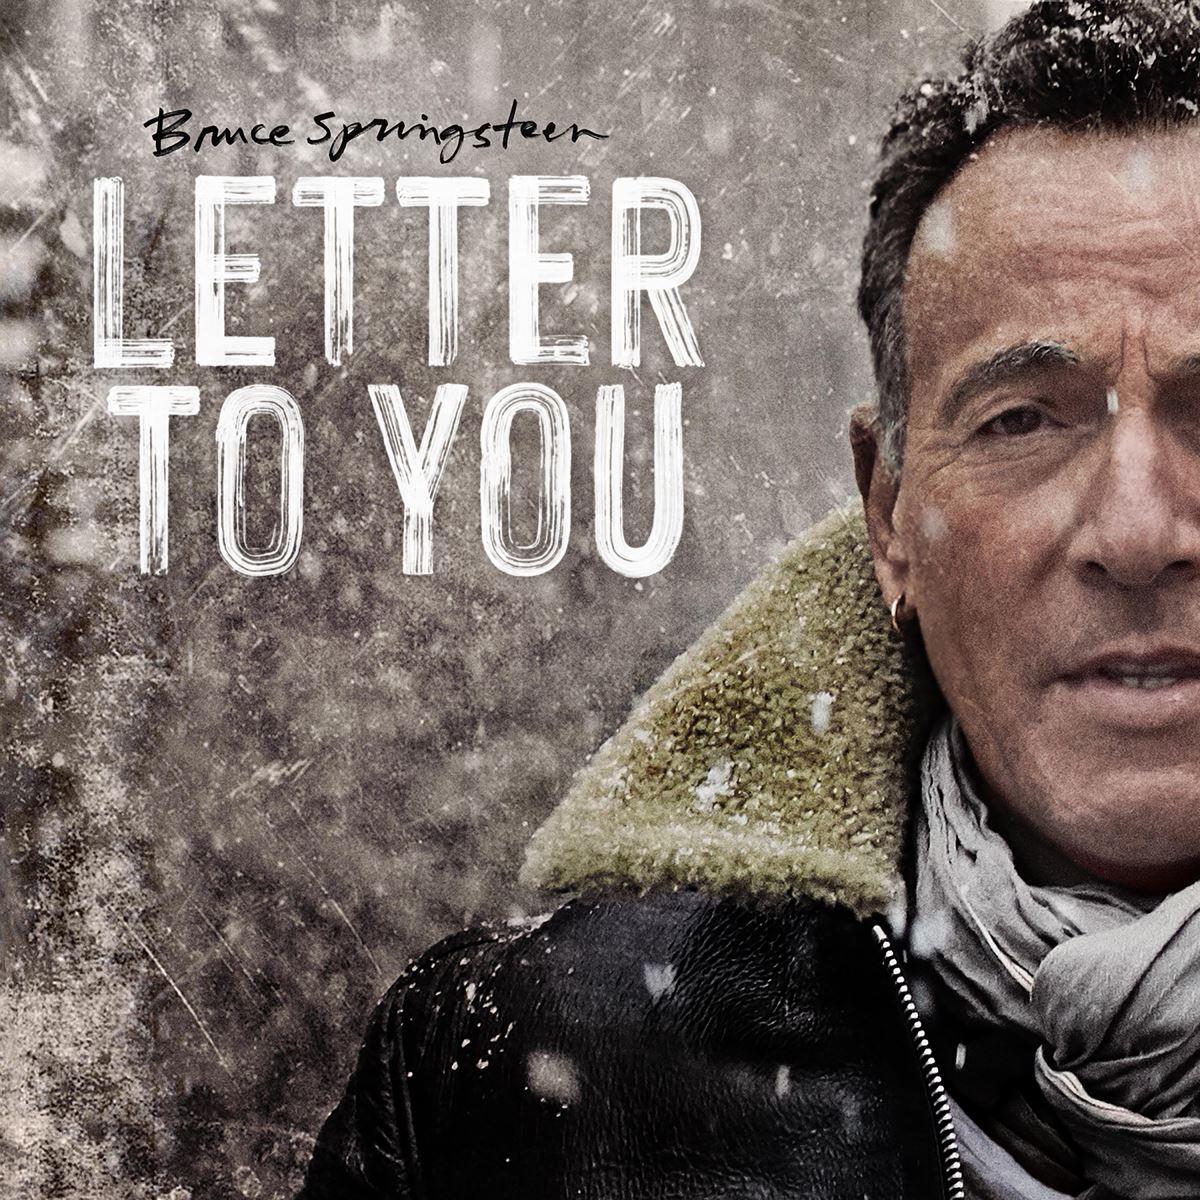 Springsteen trên bìa album "Letter To You"